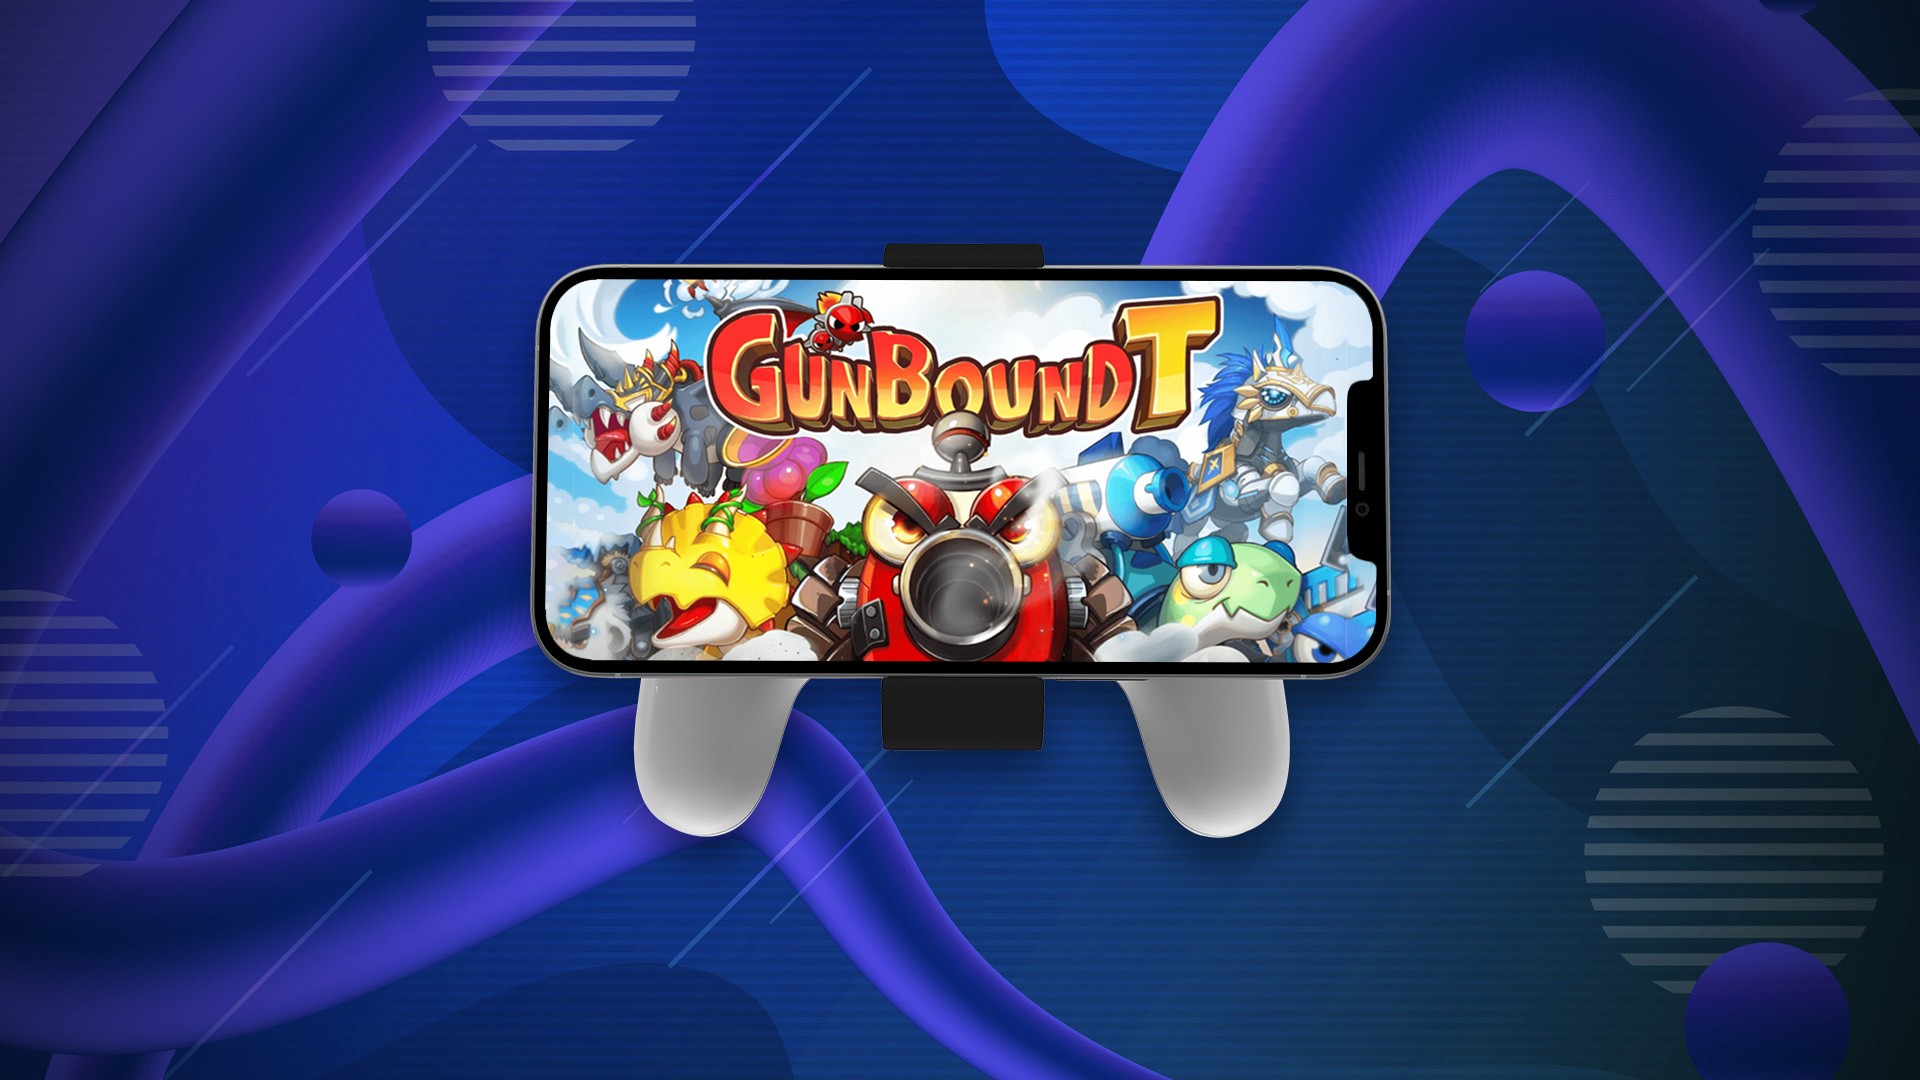 Download & Play Crash Bandicoot: On the Run! on PC & Mac (Emulator)